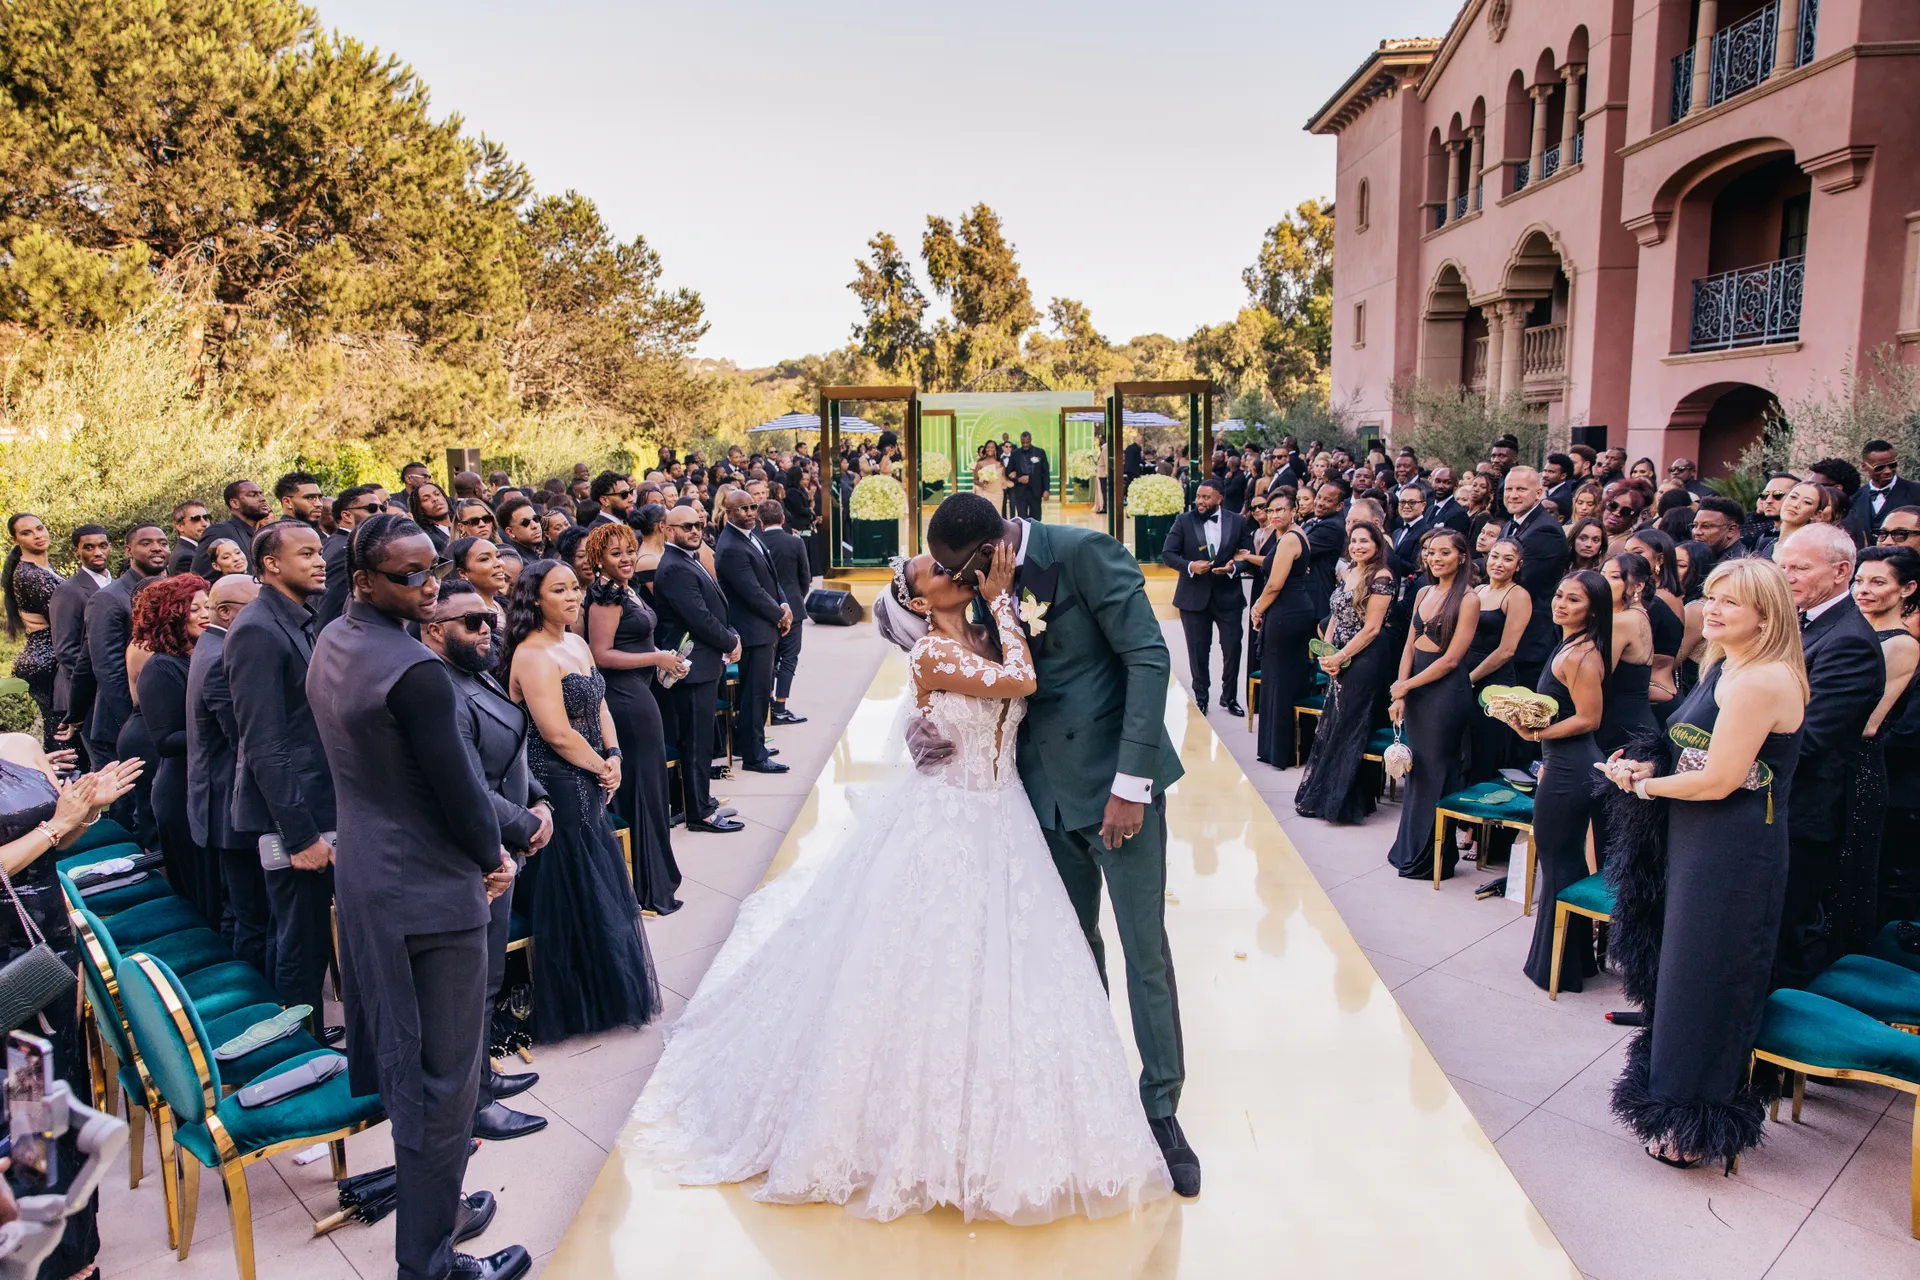 Draymond Green Weds Hazel Renee in a Golden San Diego Ceremony. (Source: Vogue)